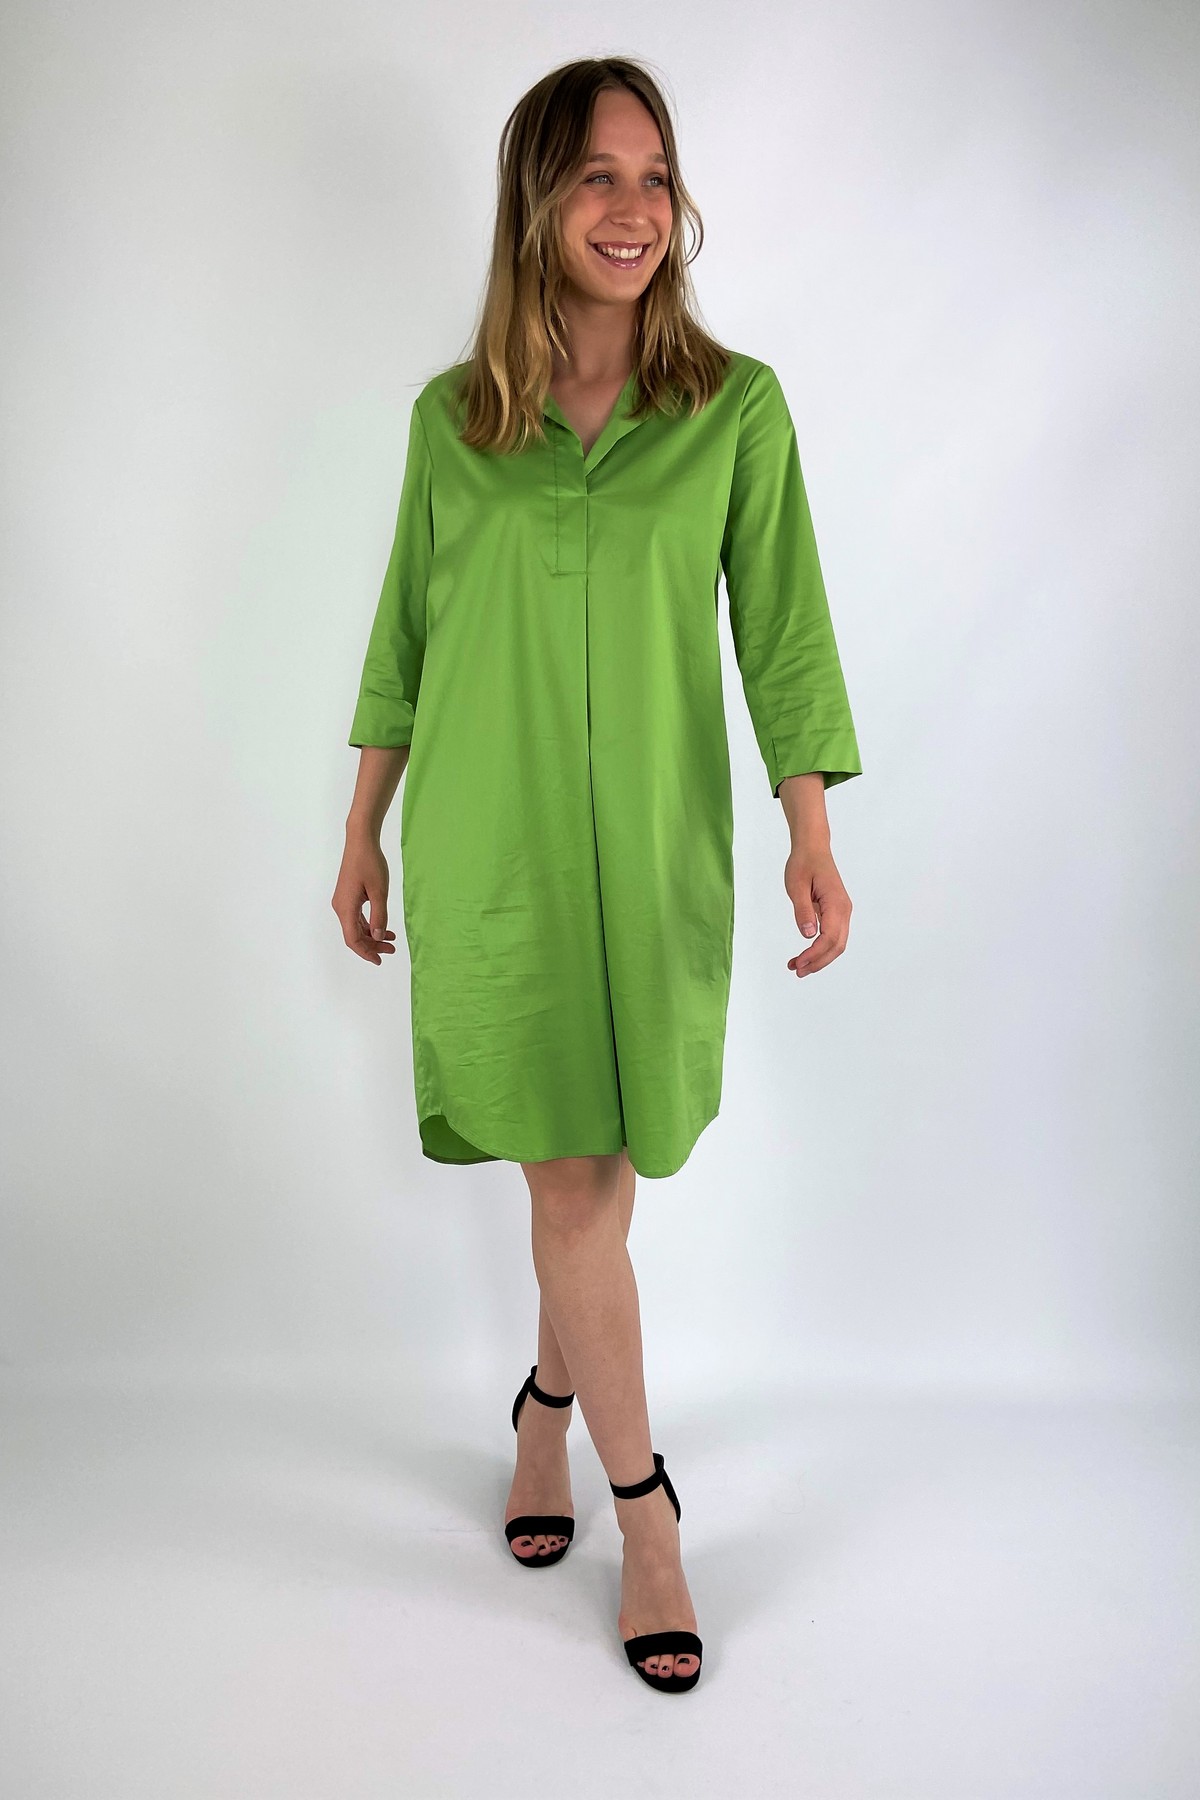 Kleed polokraag katoenstretch in de kleur groen van het merk FFC